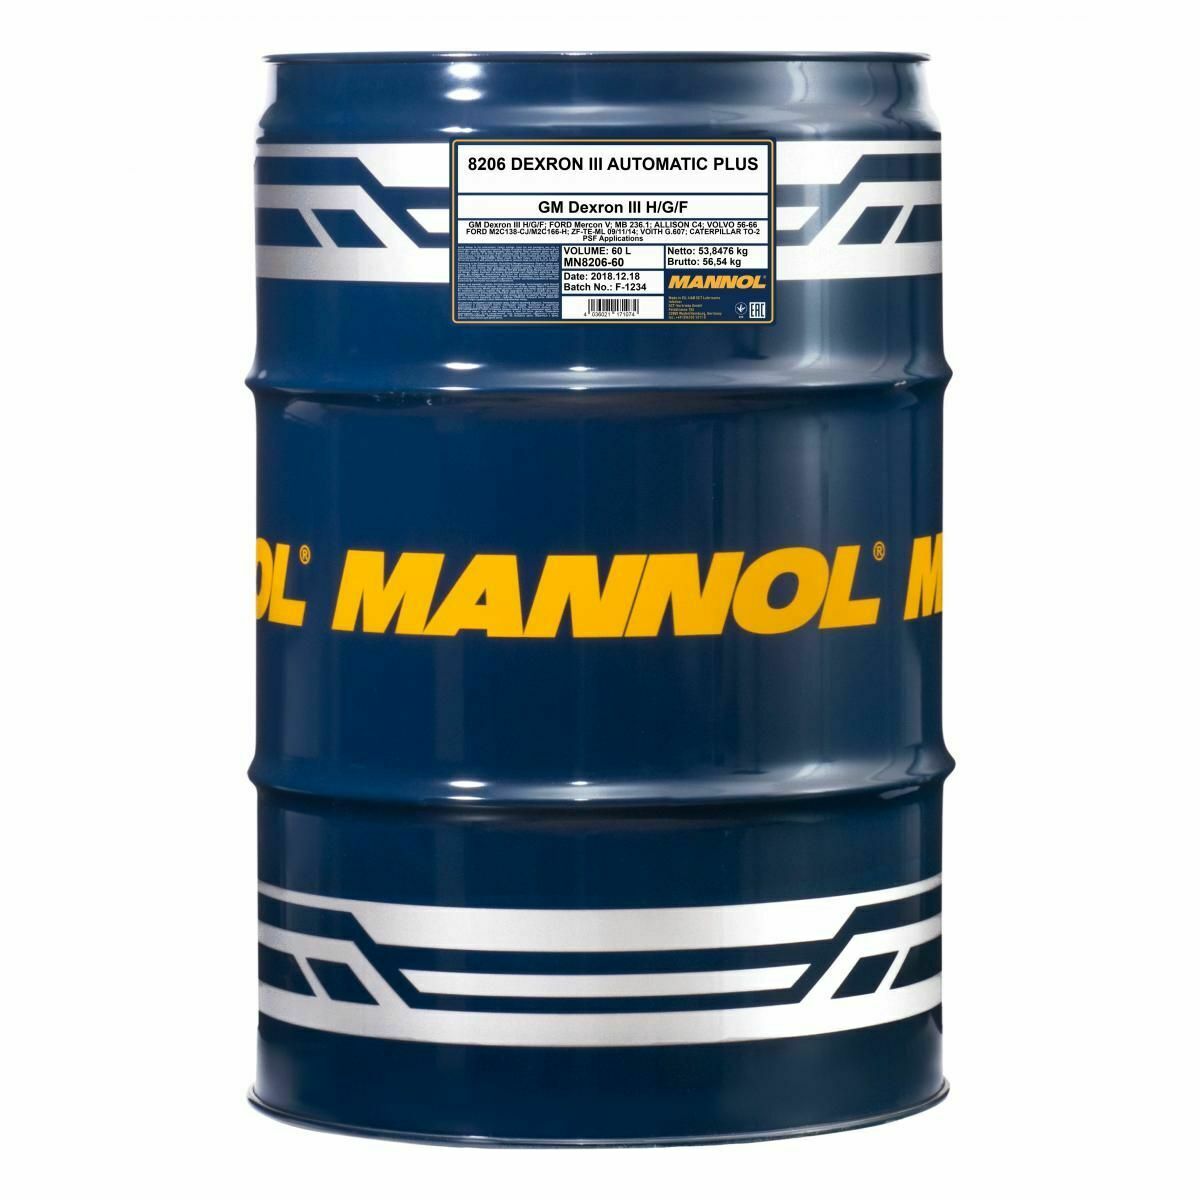 60 Liter MANNOL Dexron III Automatic Plus Getriebeöl Automatikgetriebe